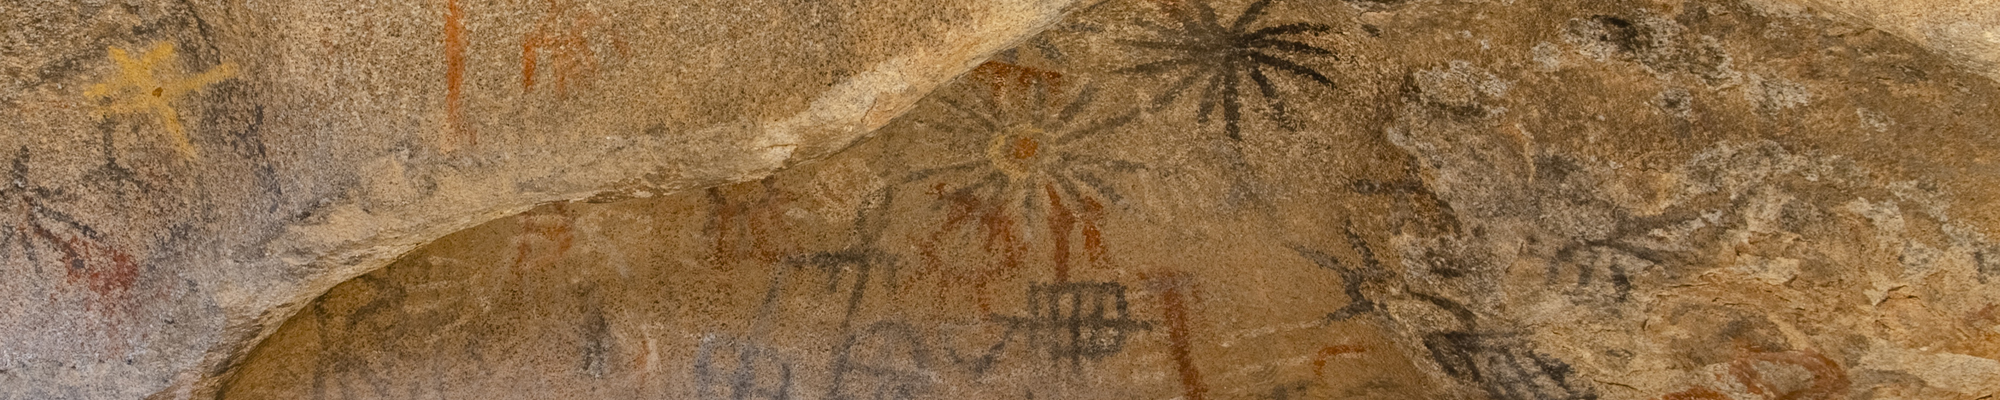 San Diego petroglyphs